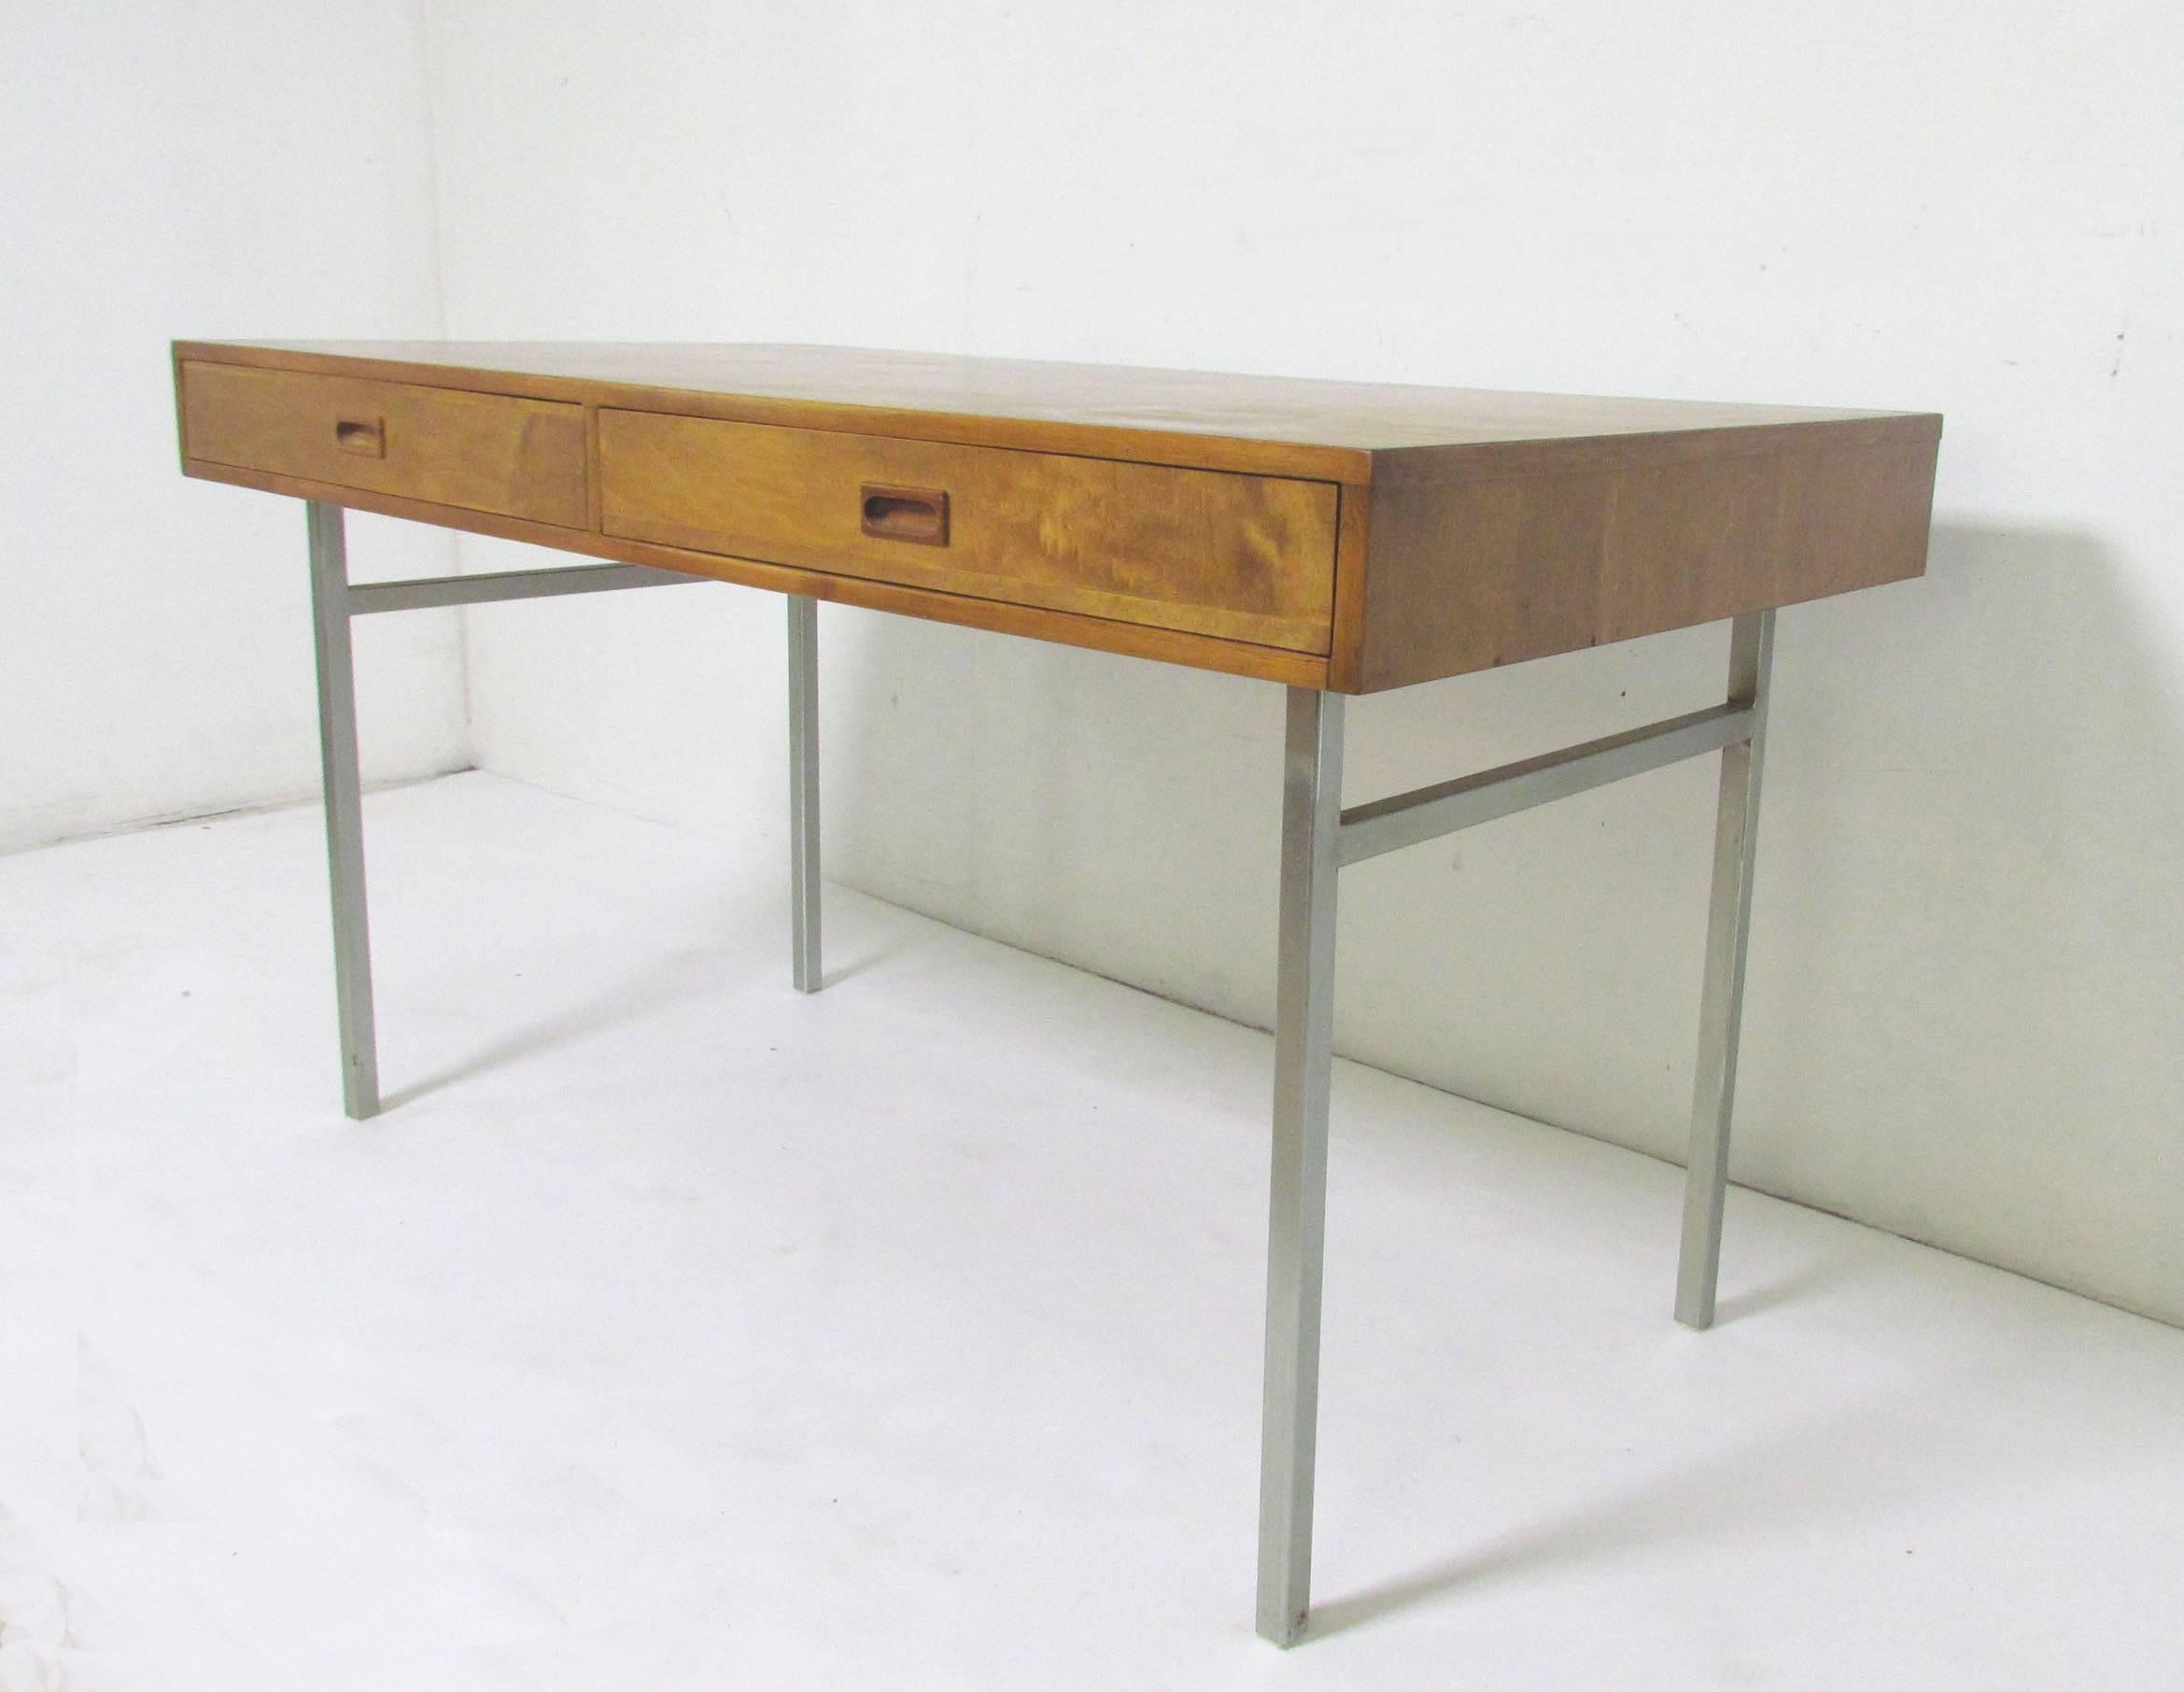 Sleek modernist two-drawer desk in walnut on steel legs, circa 1970s. Most likely custom-made.